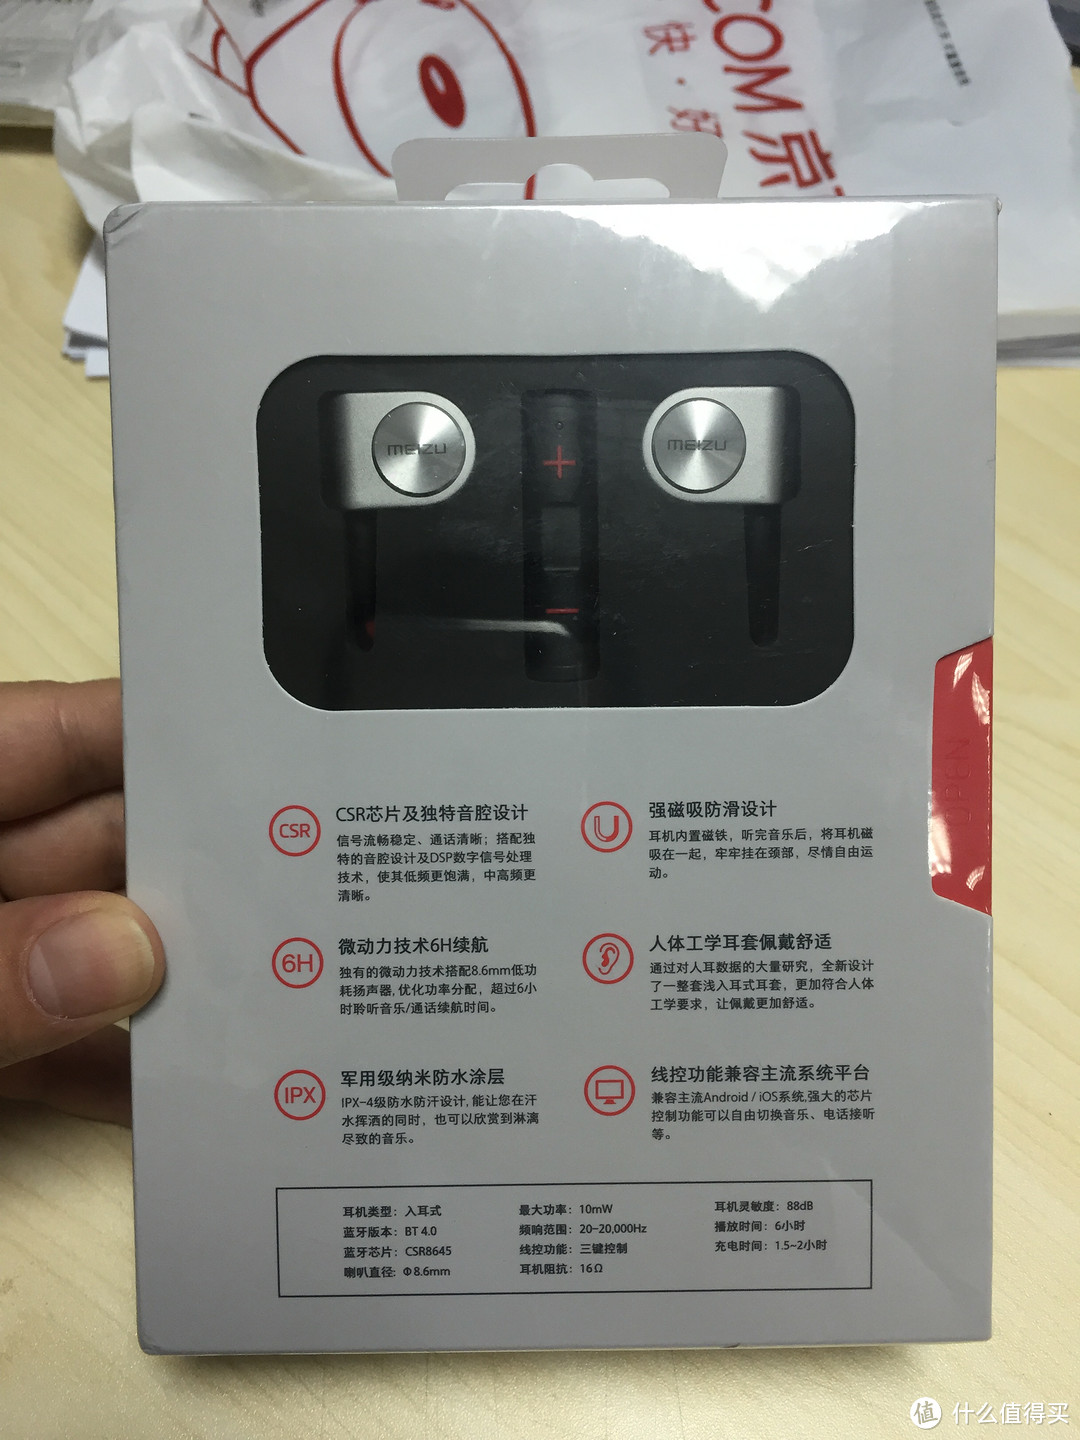 MEIZU 魅族 EP51 磁吸式专业运动蓝牙耳机开箱记